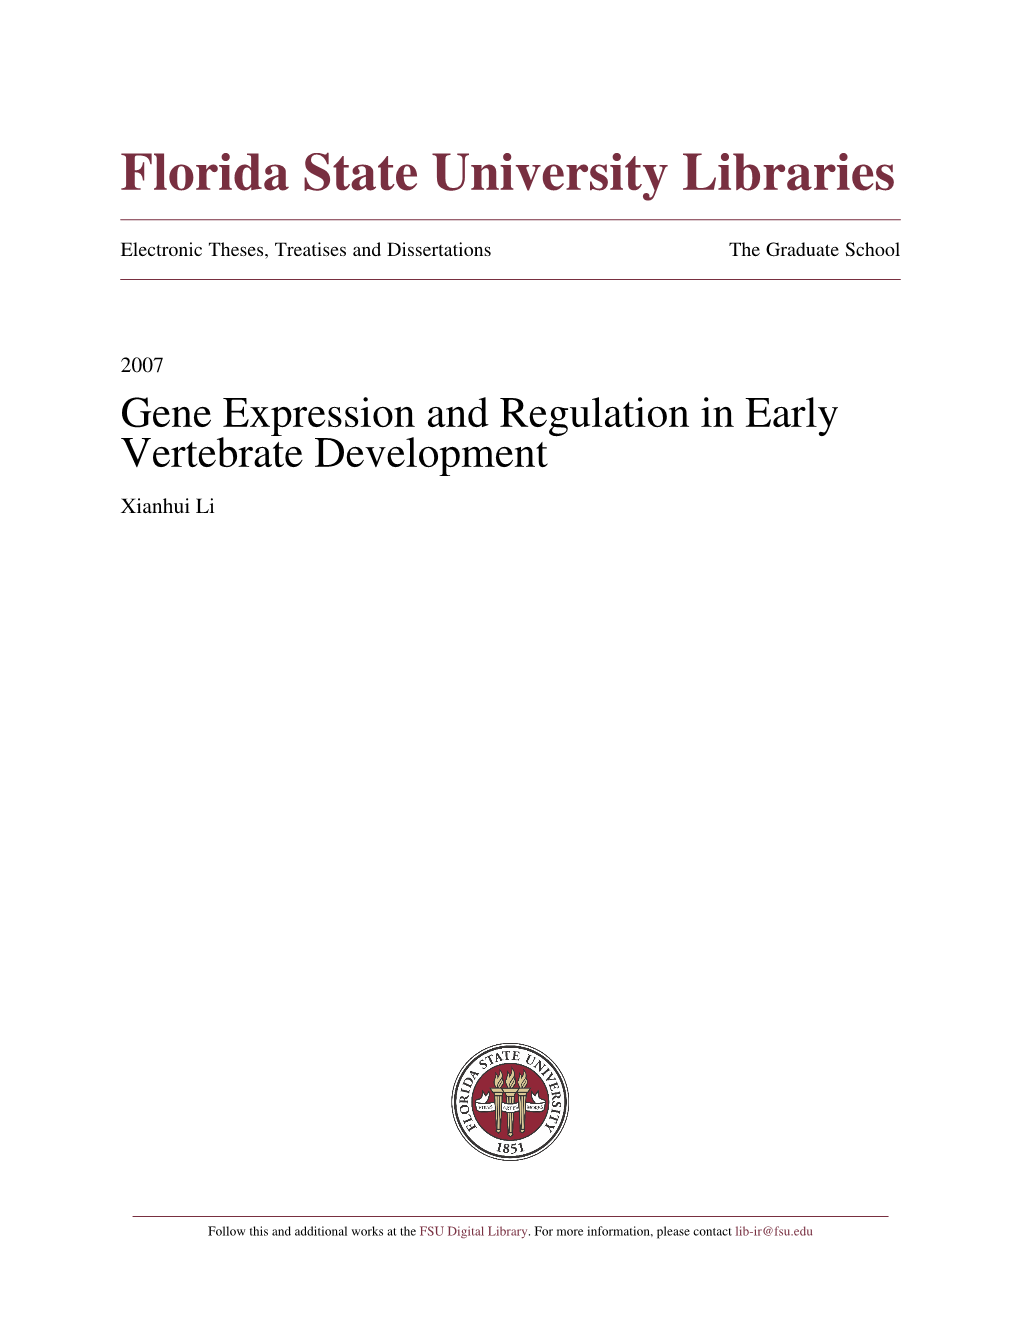 Gene Expression and Regulation in Early Vertebrate Development Xianhui Li